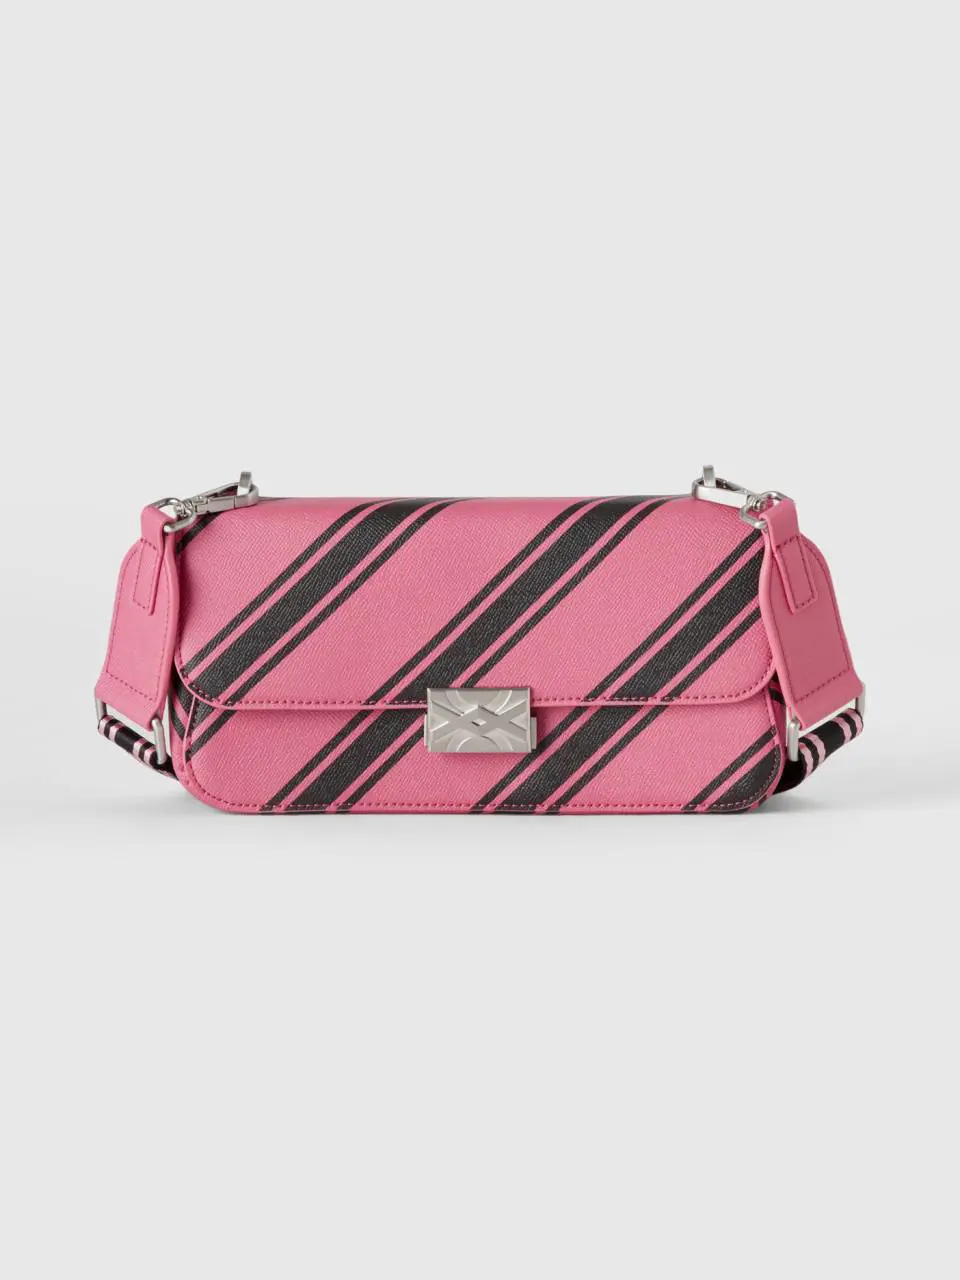 Benetton pink handbag with regimental stripes. 1